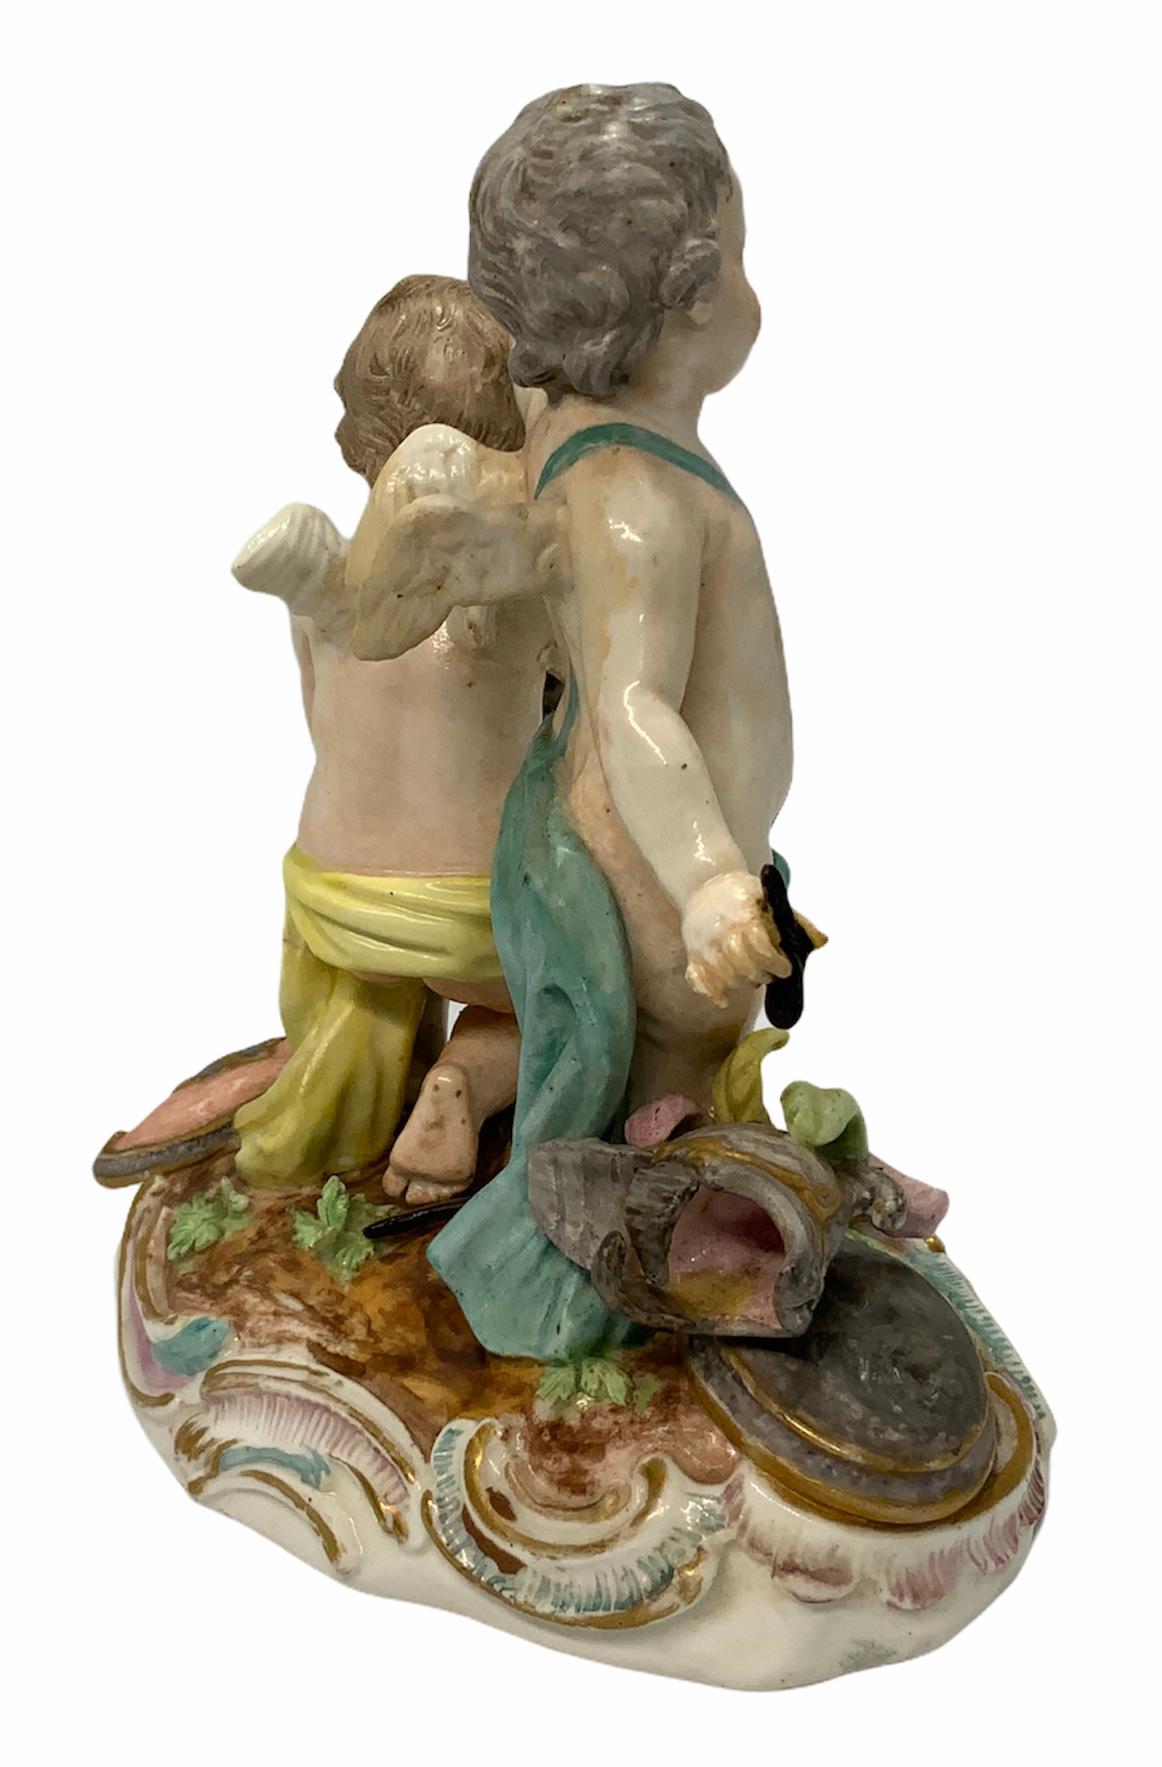 German Royal Porcelain or State’s Porcelain Manufactory 'KPM' Cherub’s Sculpture For Sale